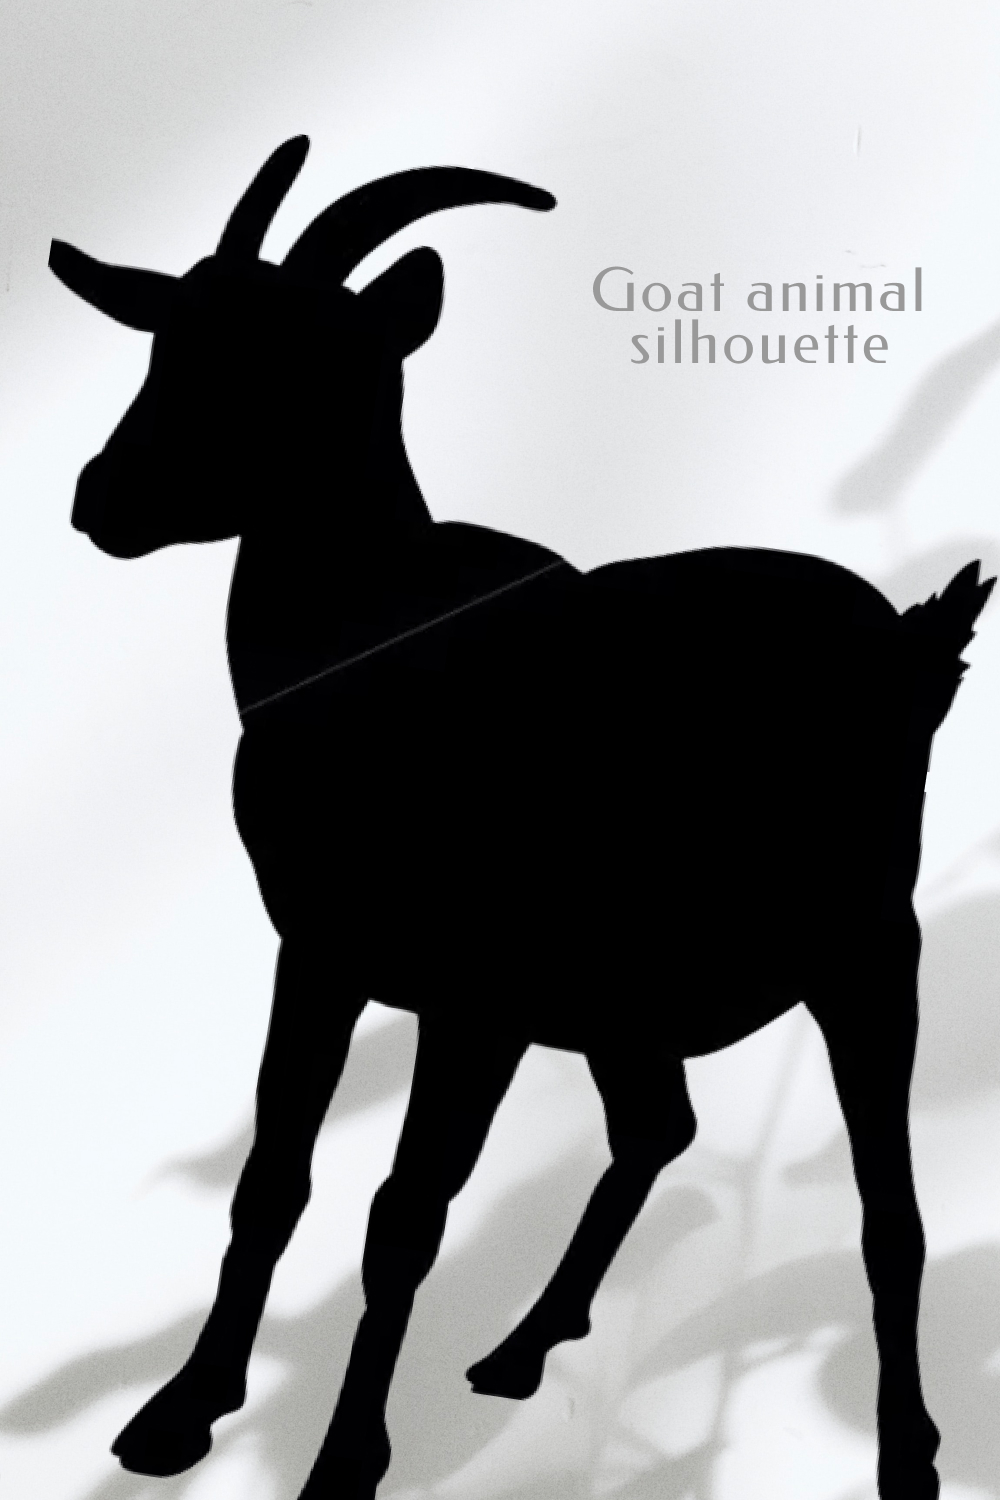 Goat Animal Silhouette pinterest image.